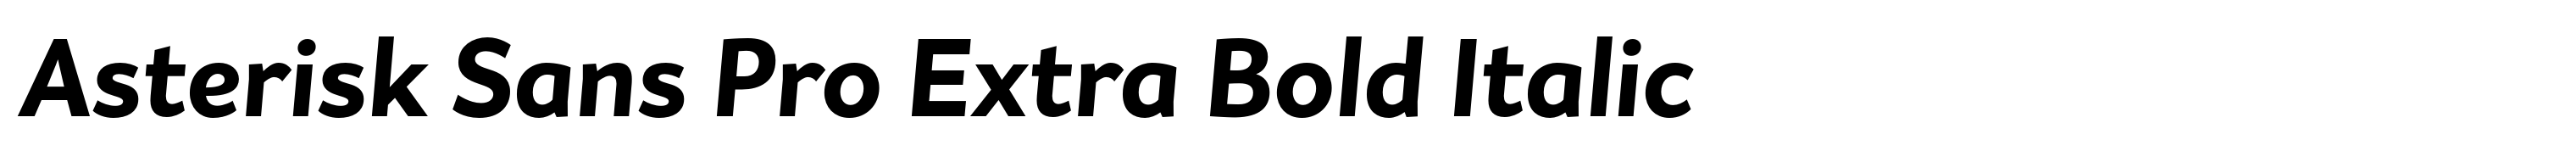 Asterisk Sans Pro Extra Bold Italic